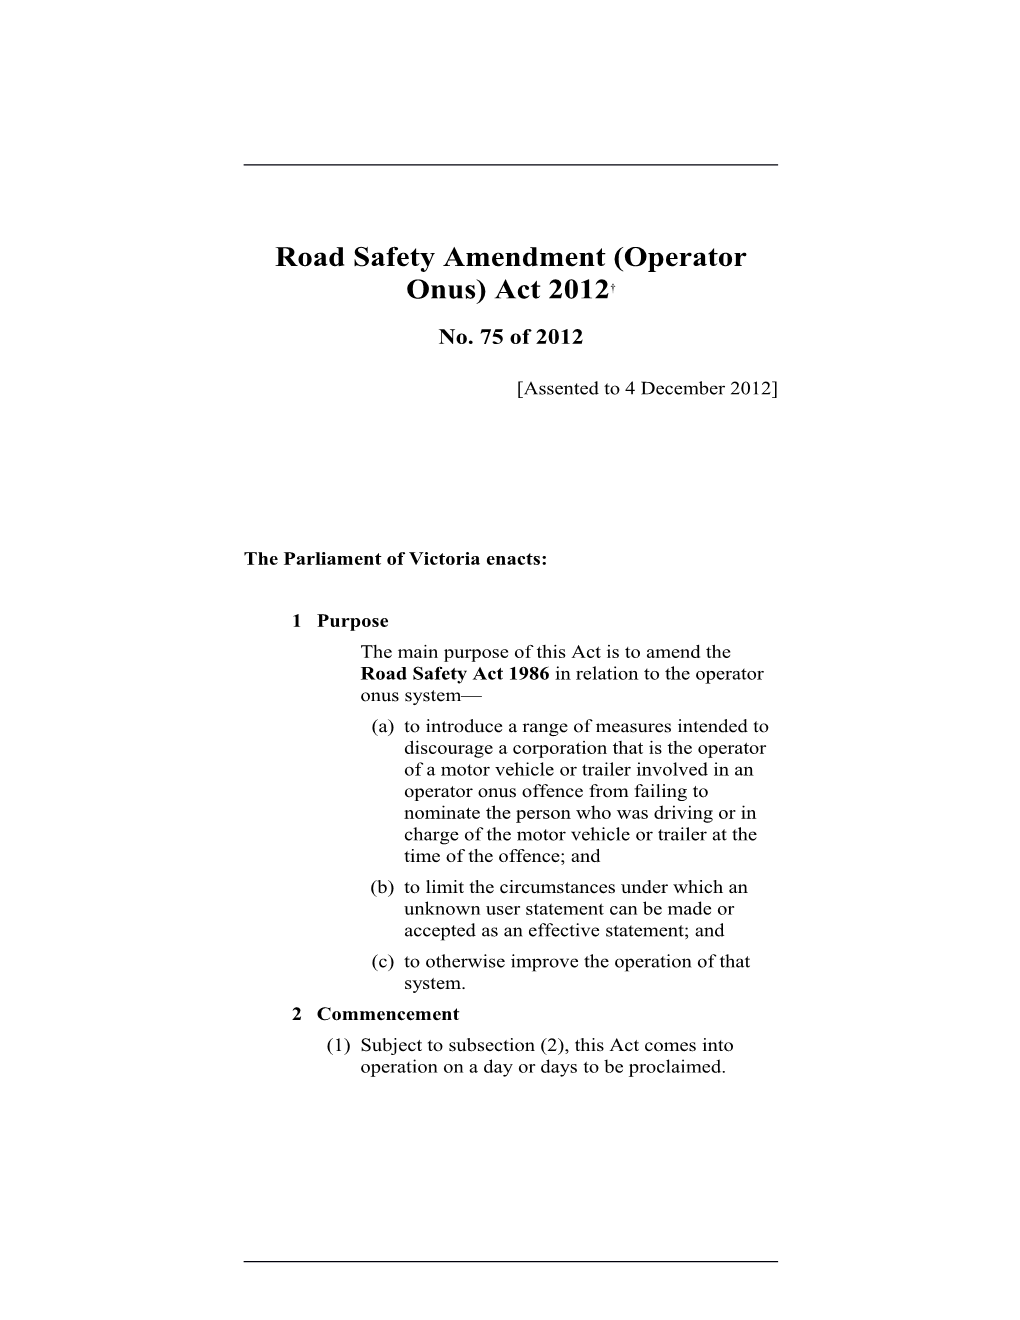 Road Safety Amendment (Operator Onus) Act 2012